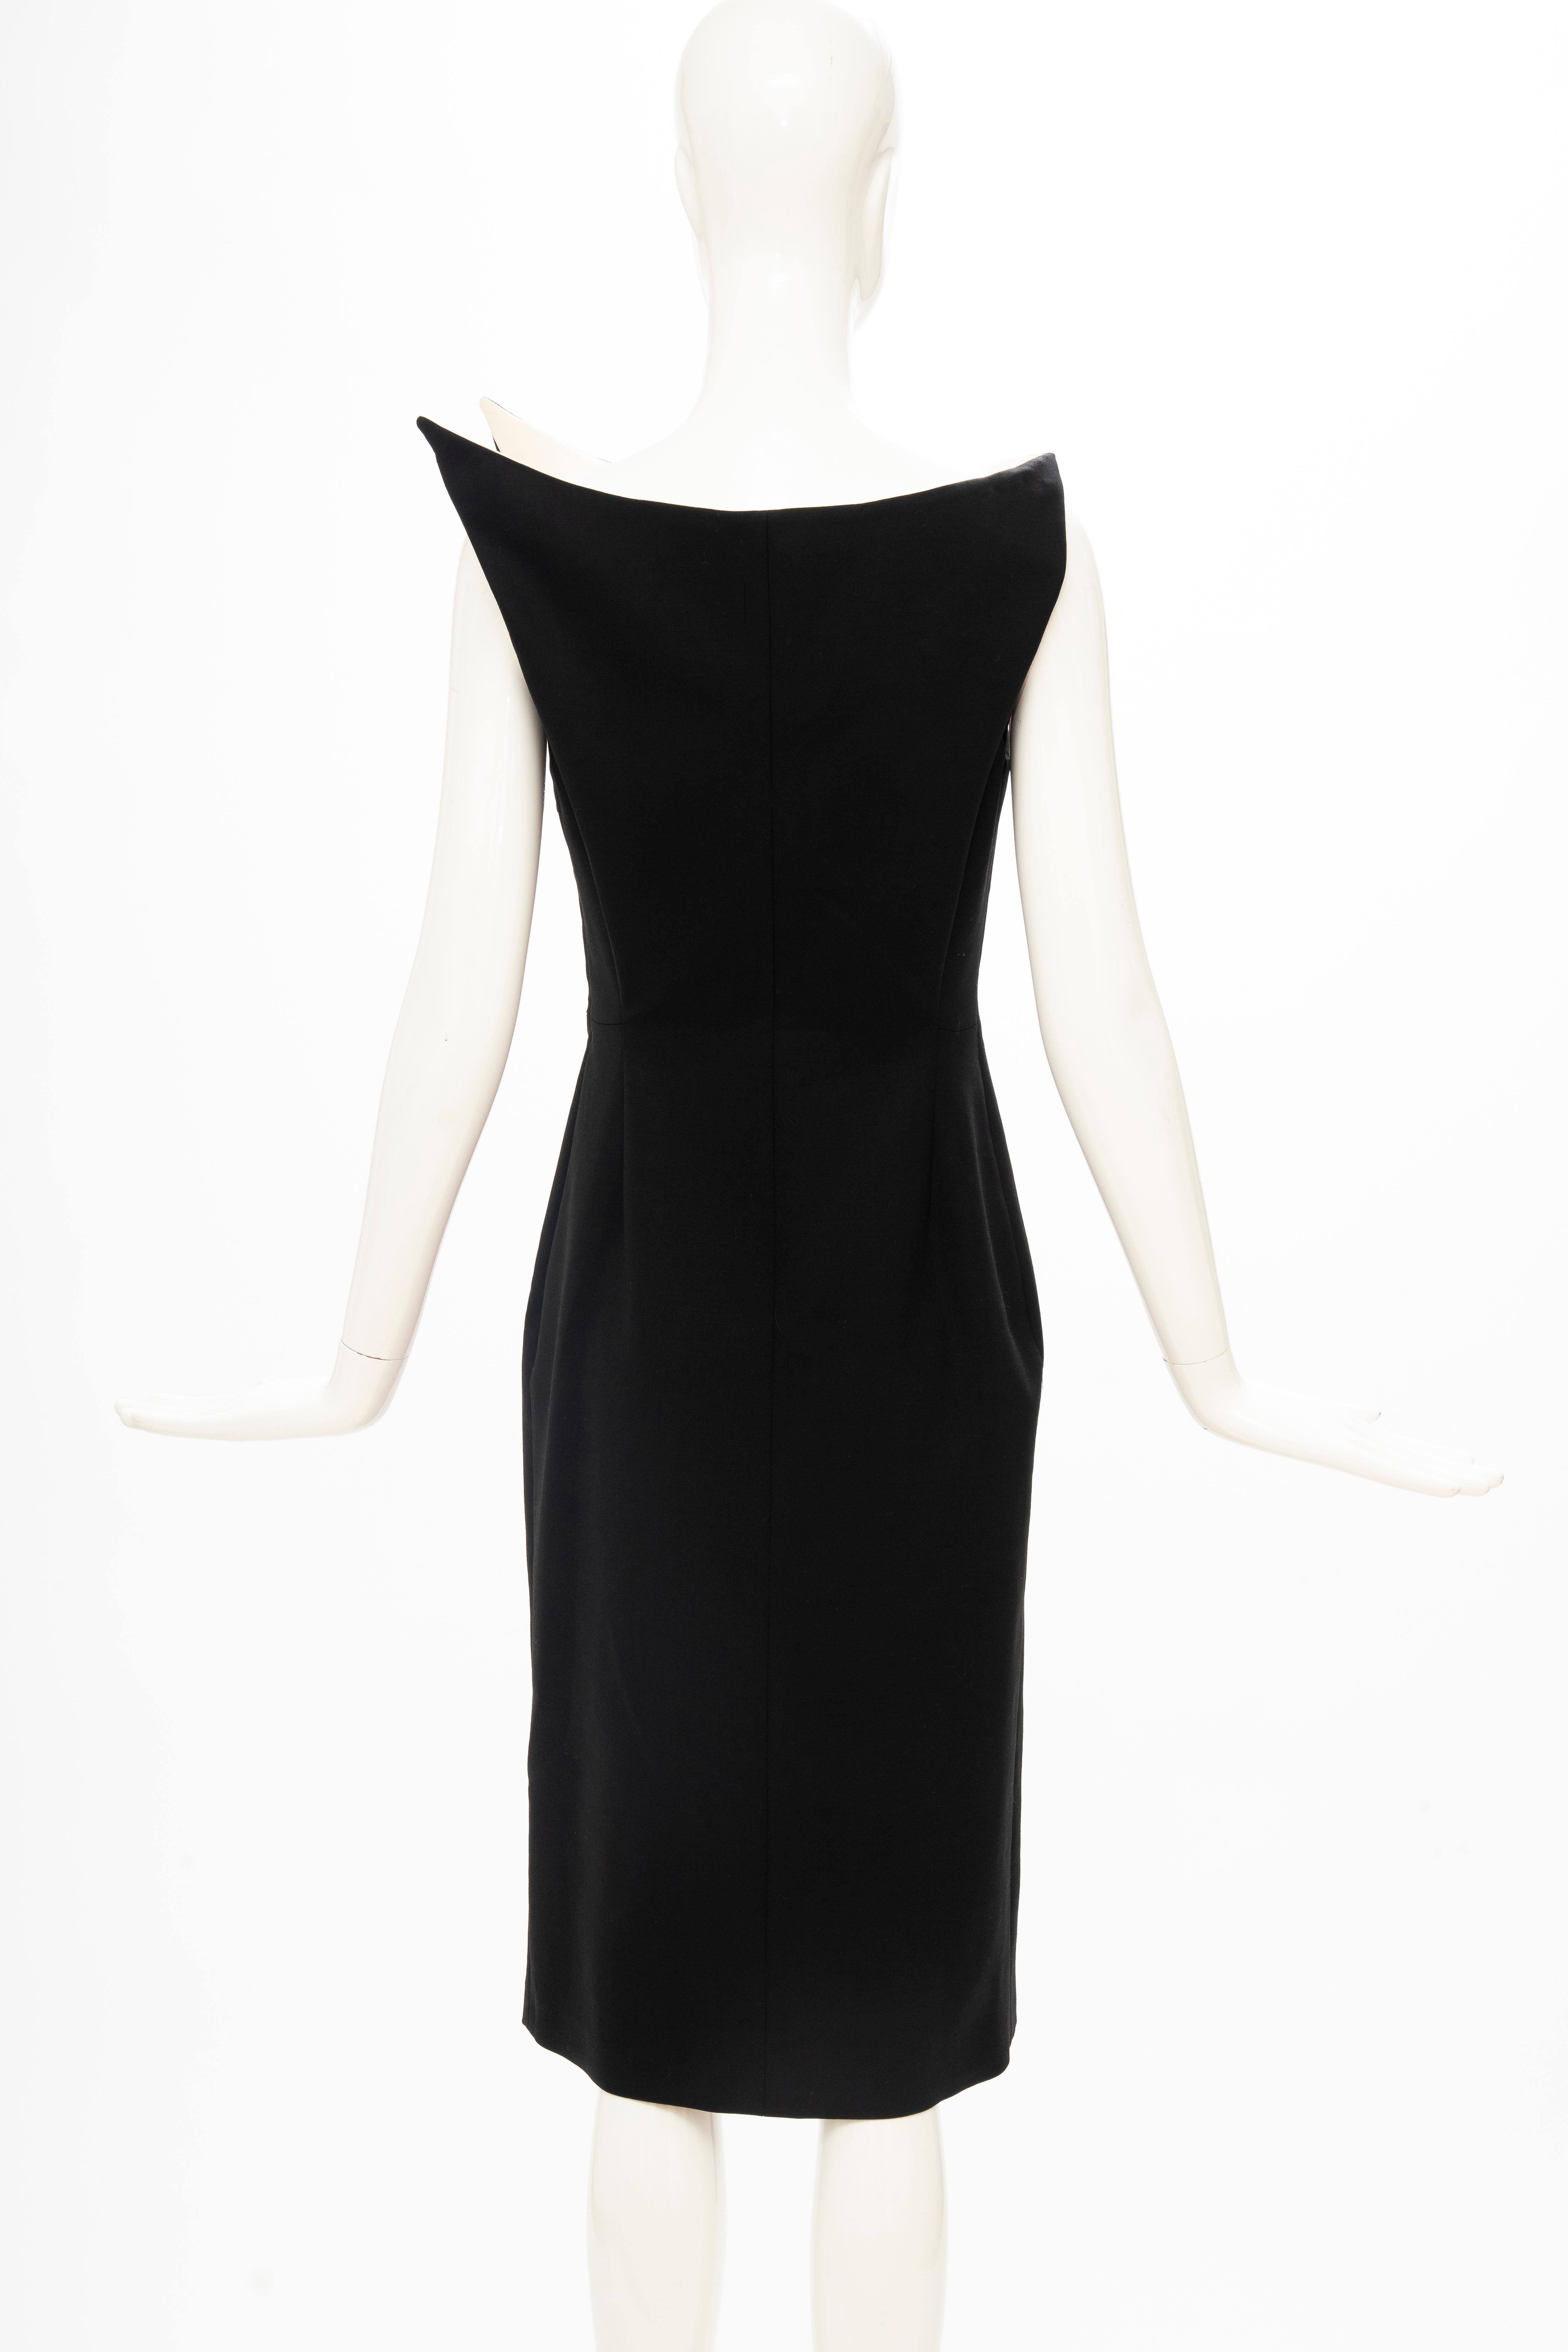 Women's Raf Simons for Jil Sander Runway Black Wool Sculptural Evening Dress, Fall 2009 For Sale